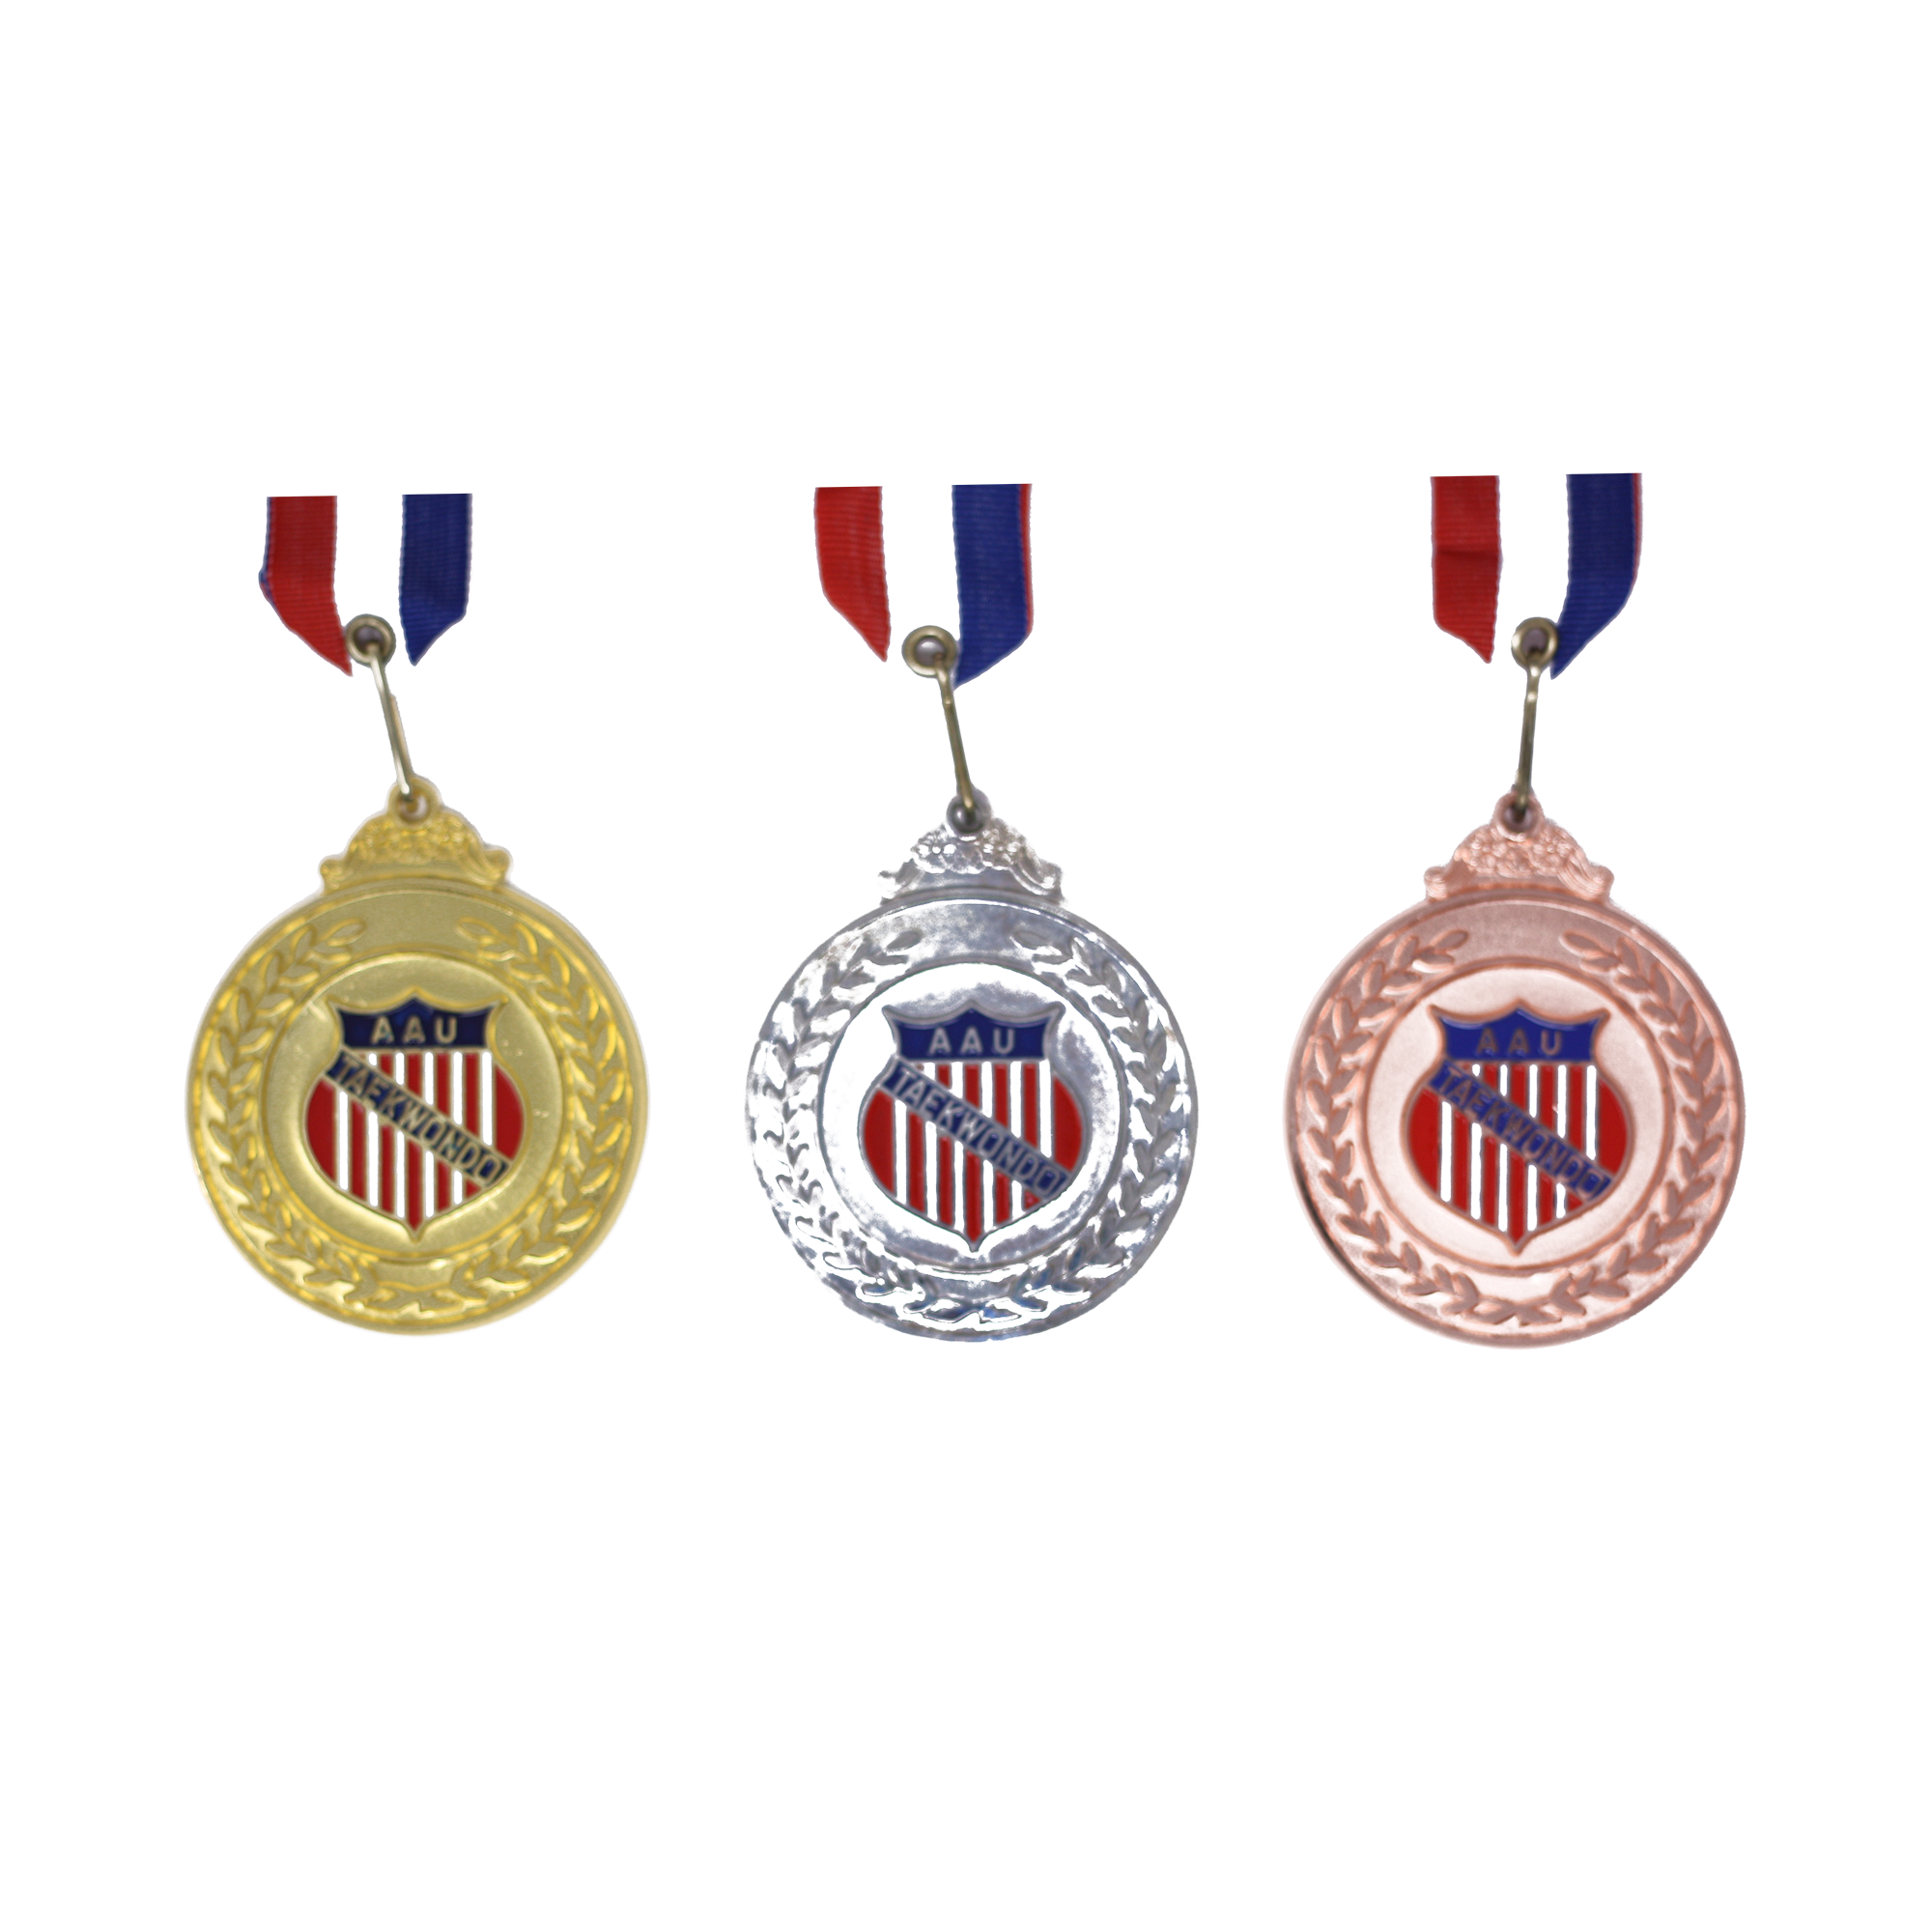 AAU Taekwondo Medal Best Martial Arts / MOOTO USA